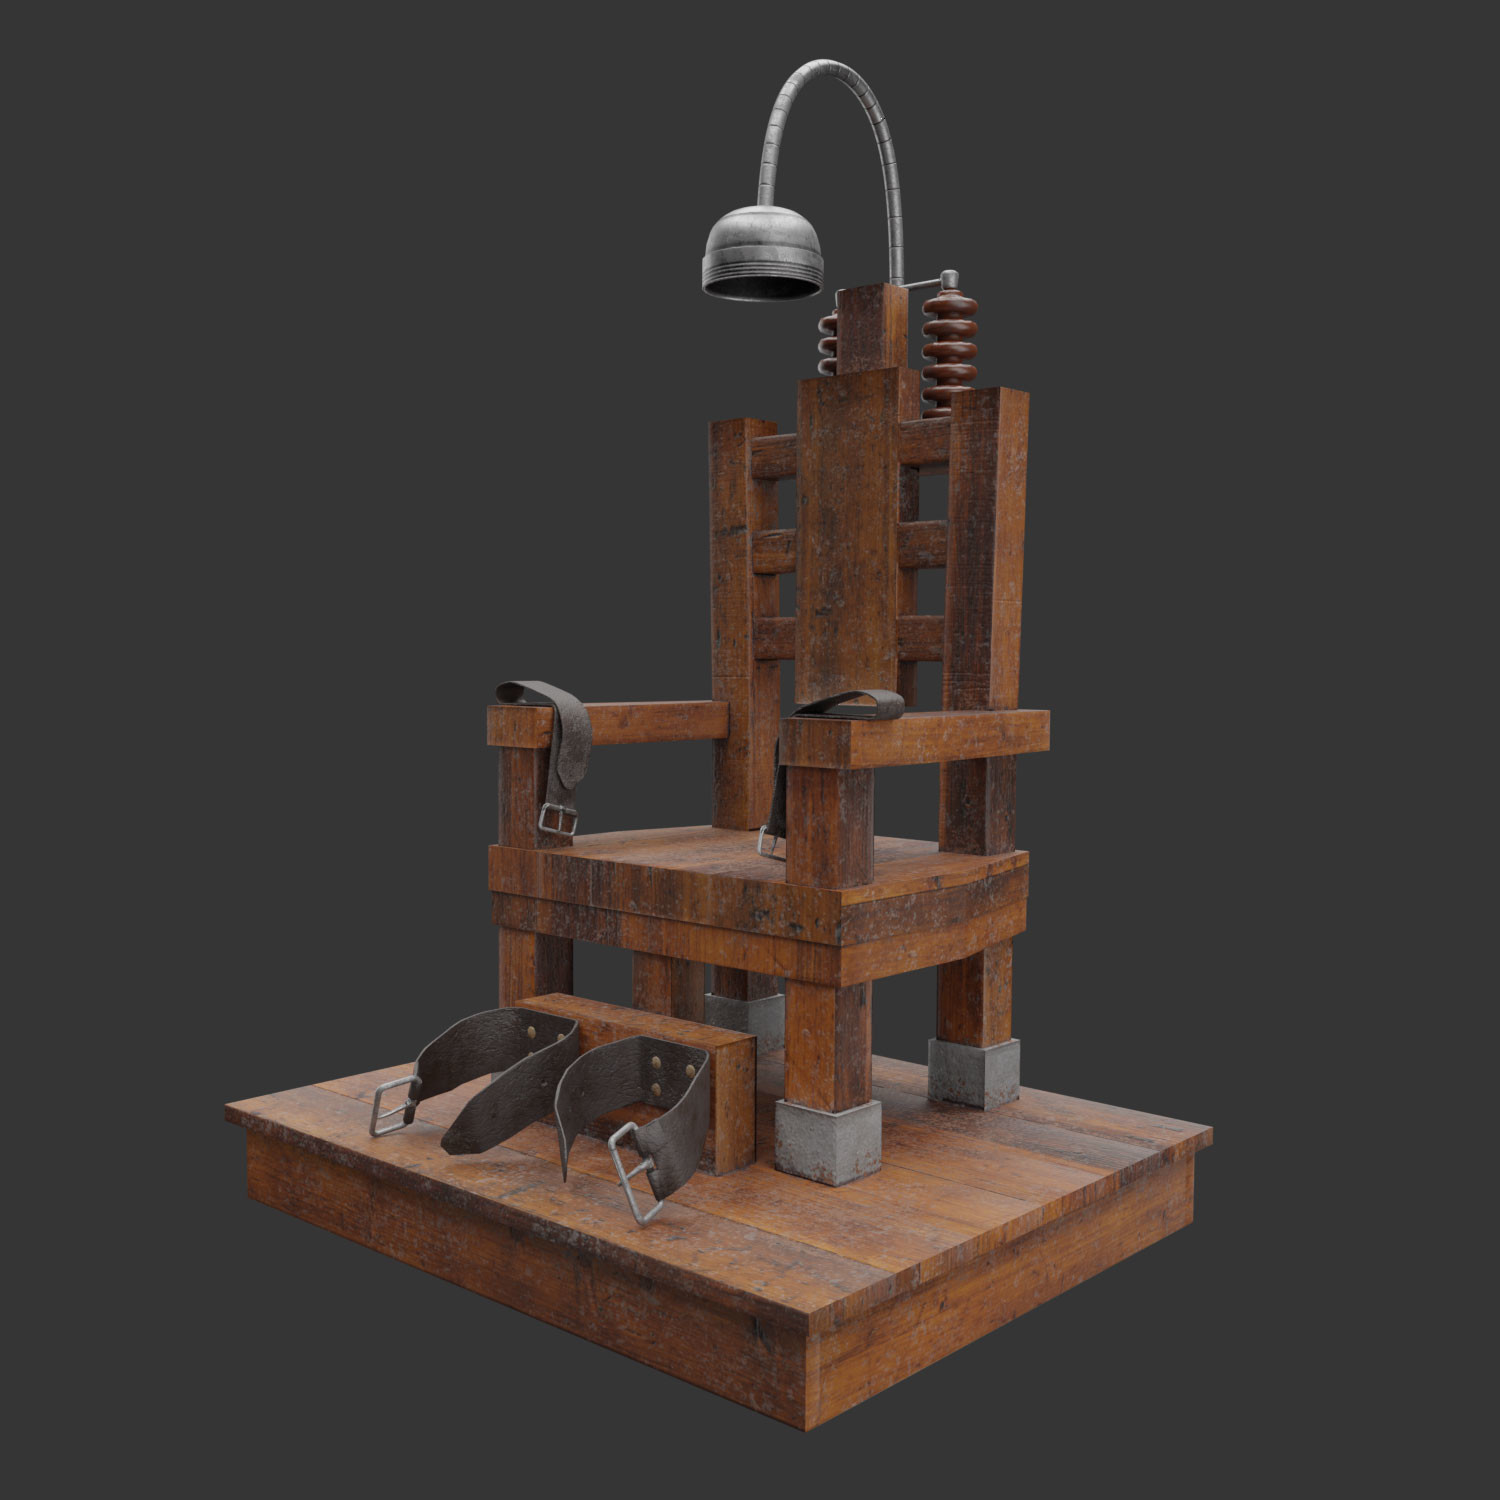 Owen Egan Ol Sparky Realtime Electric Chair 3d Model